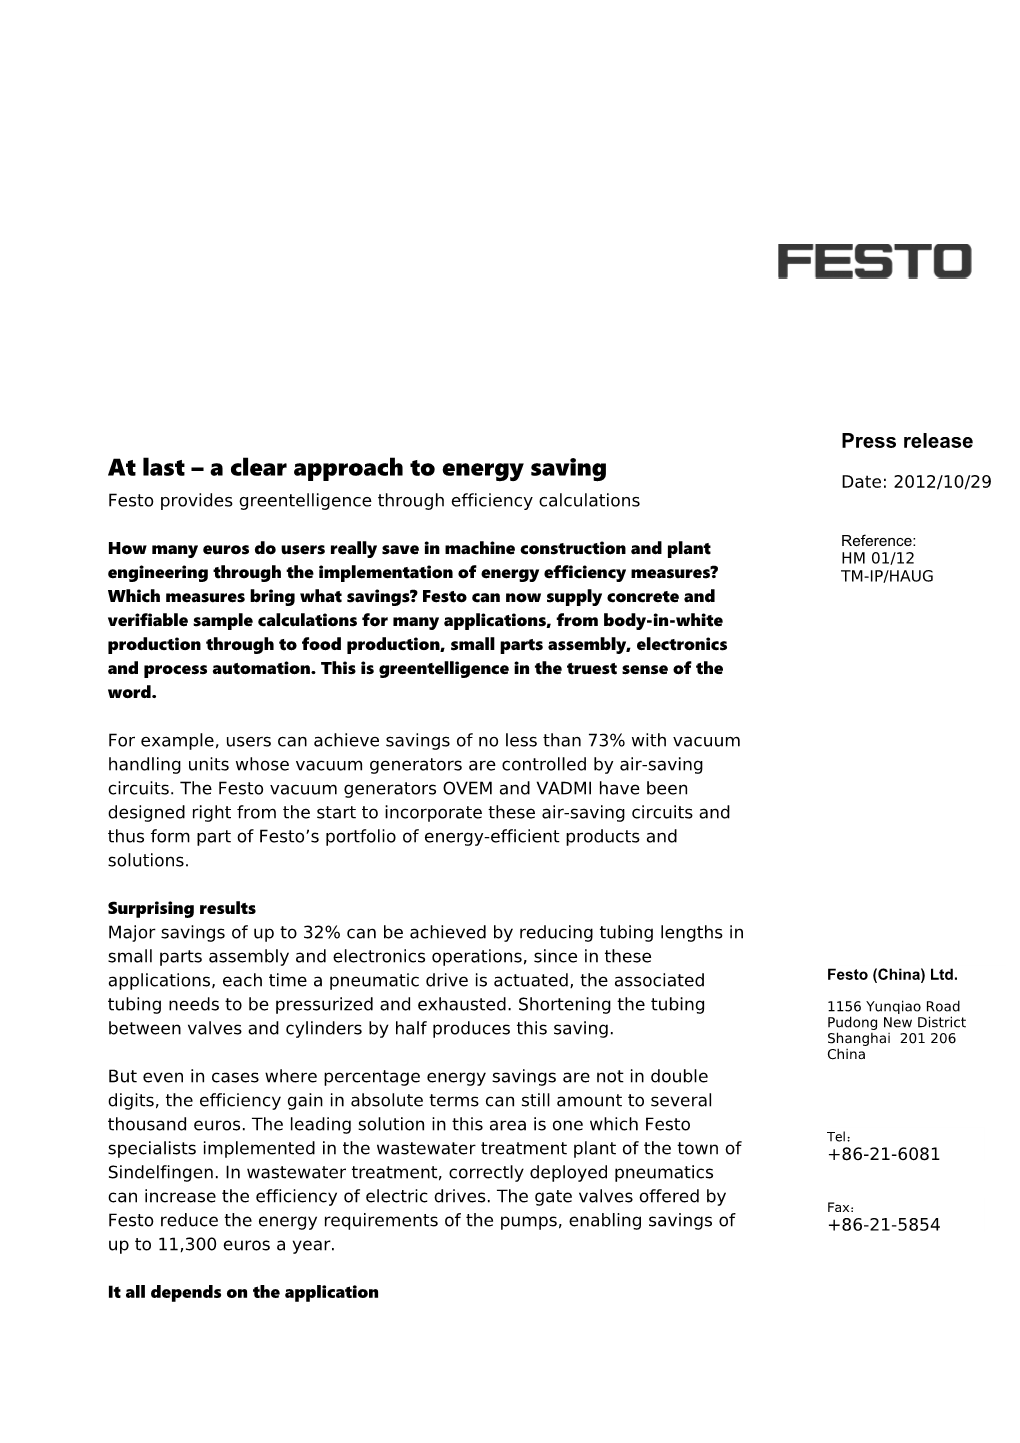 Festo Provides Greentelligence Through Efficiency Calculations